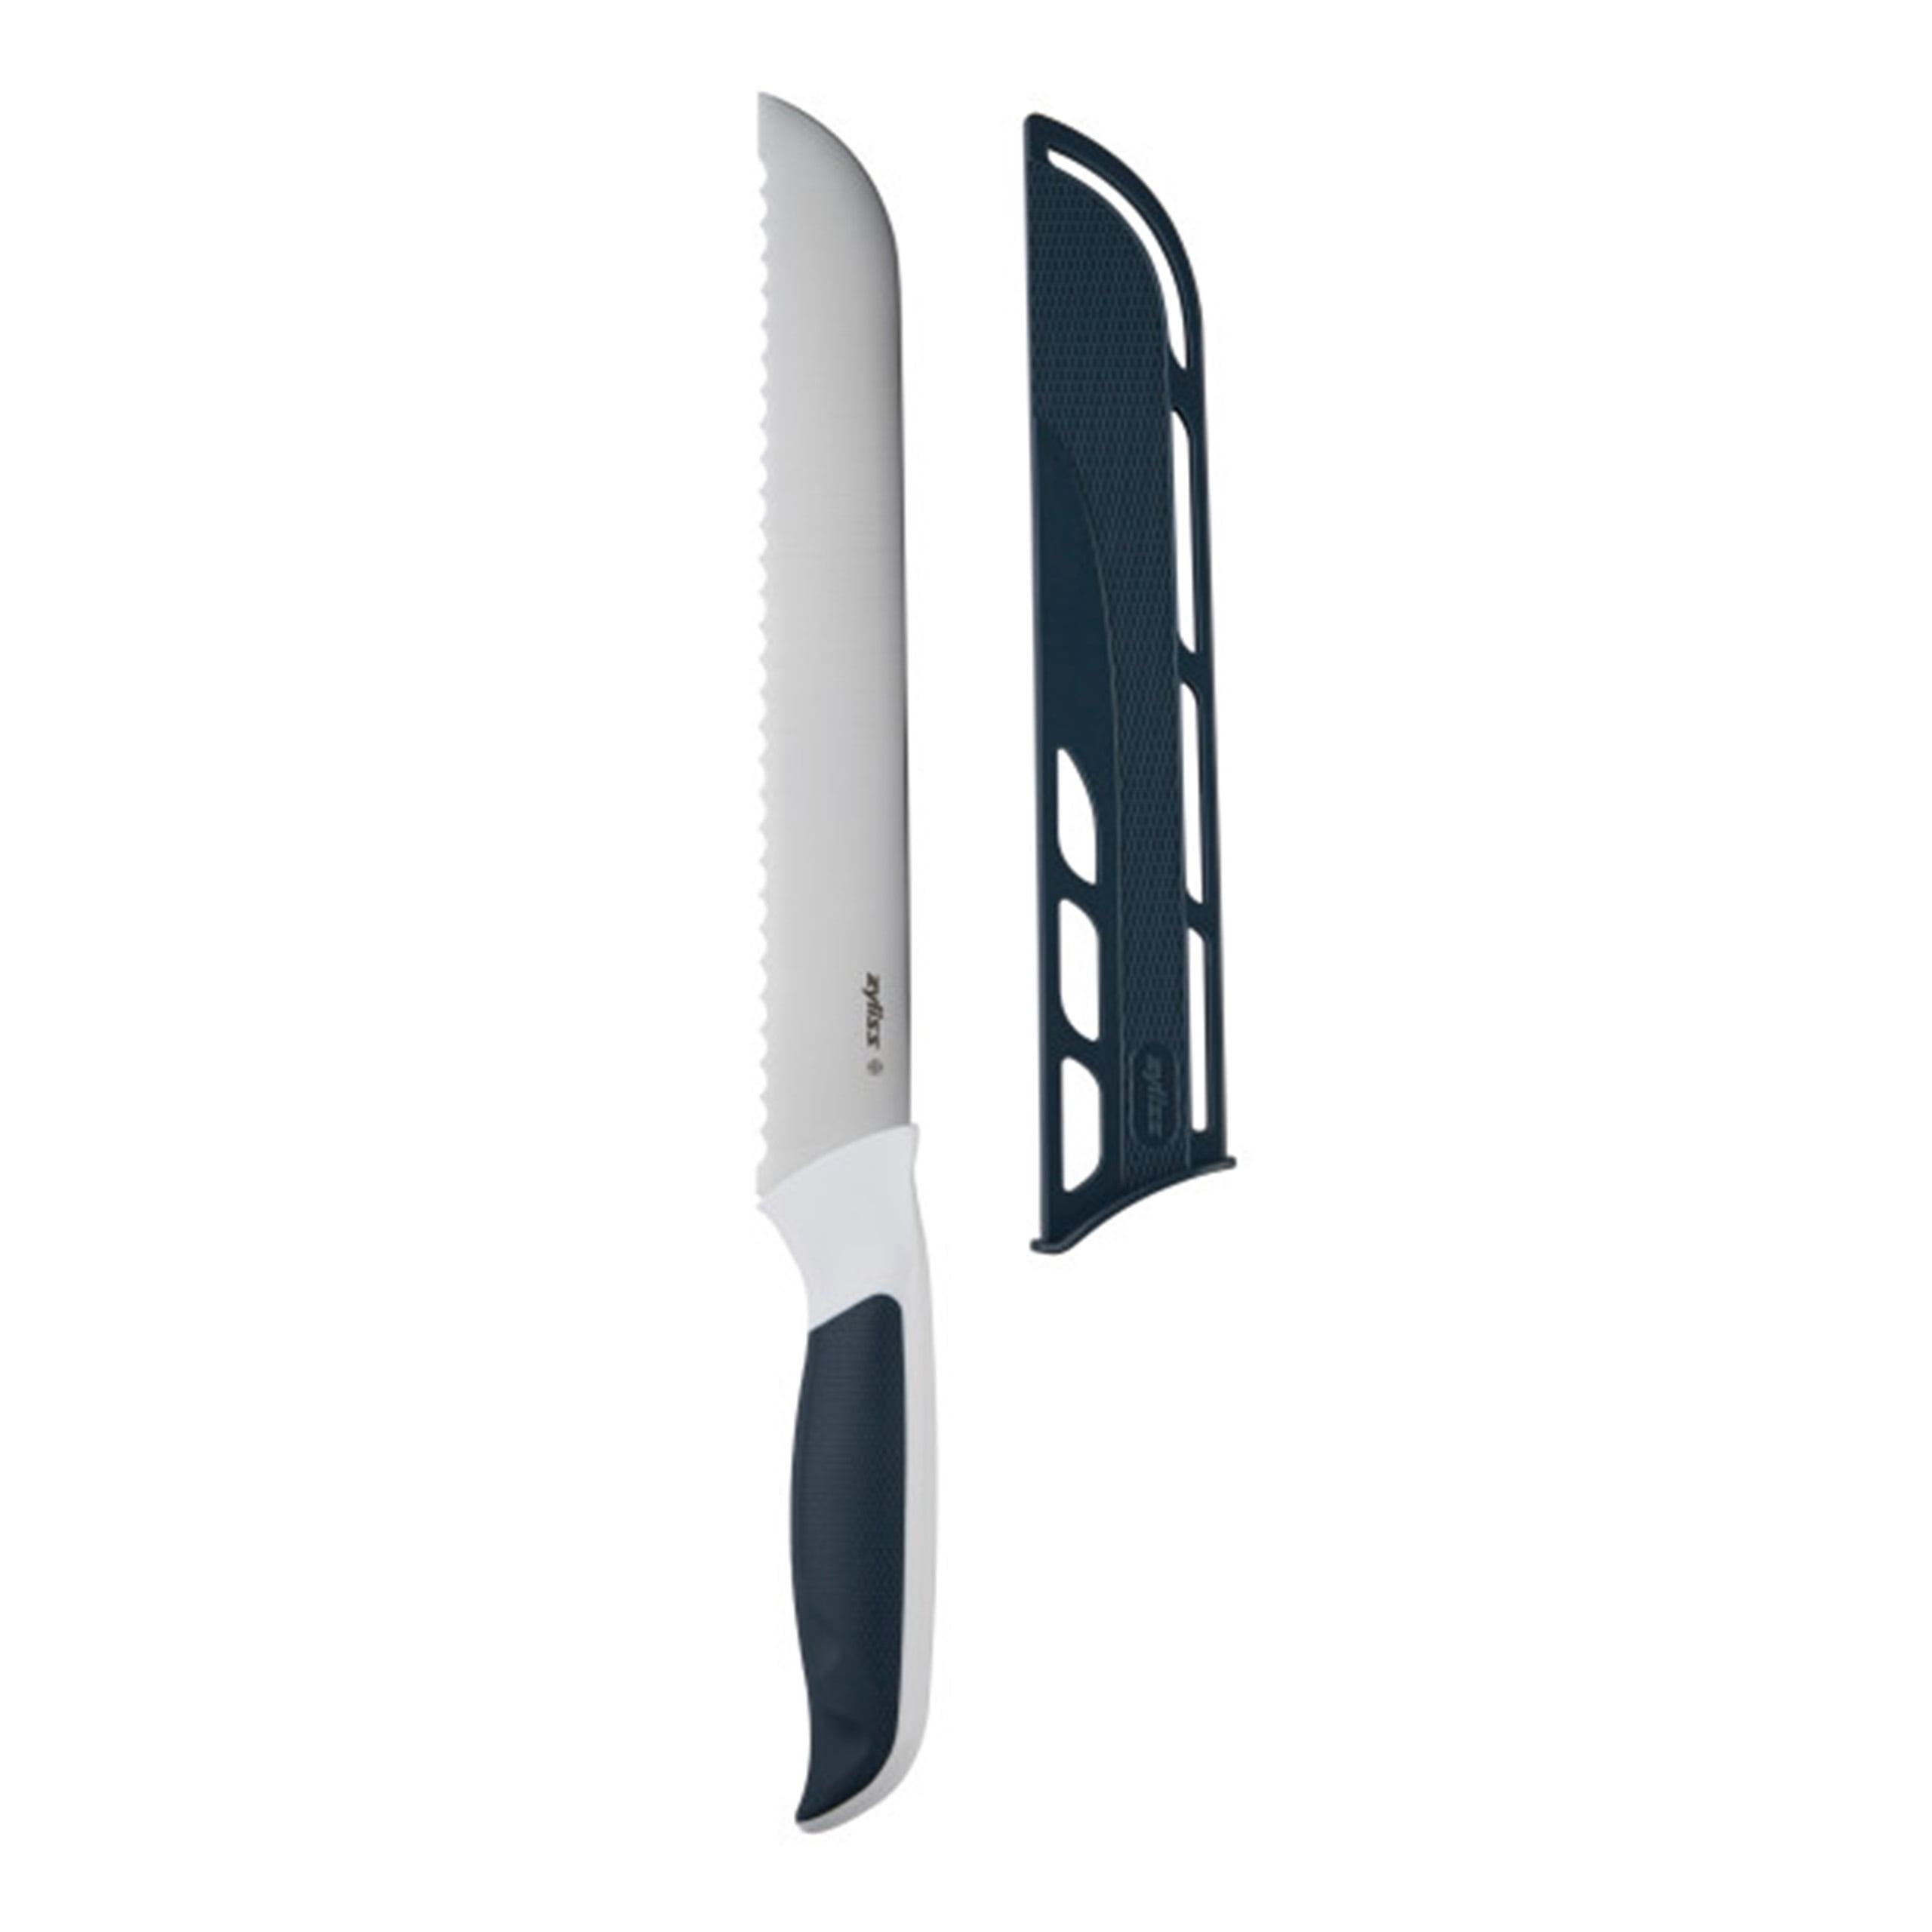 Zyliss Comfort 6-Piece Kitchen Knife Set review